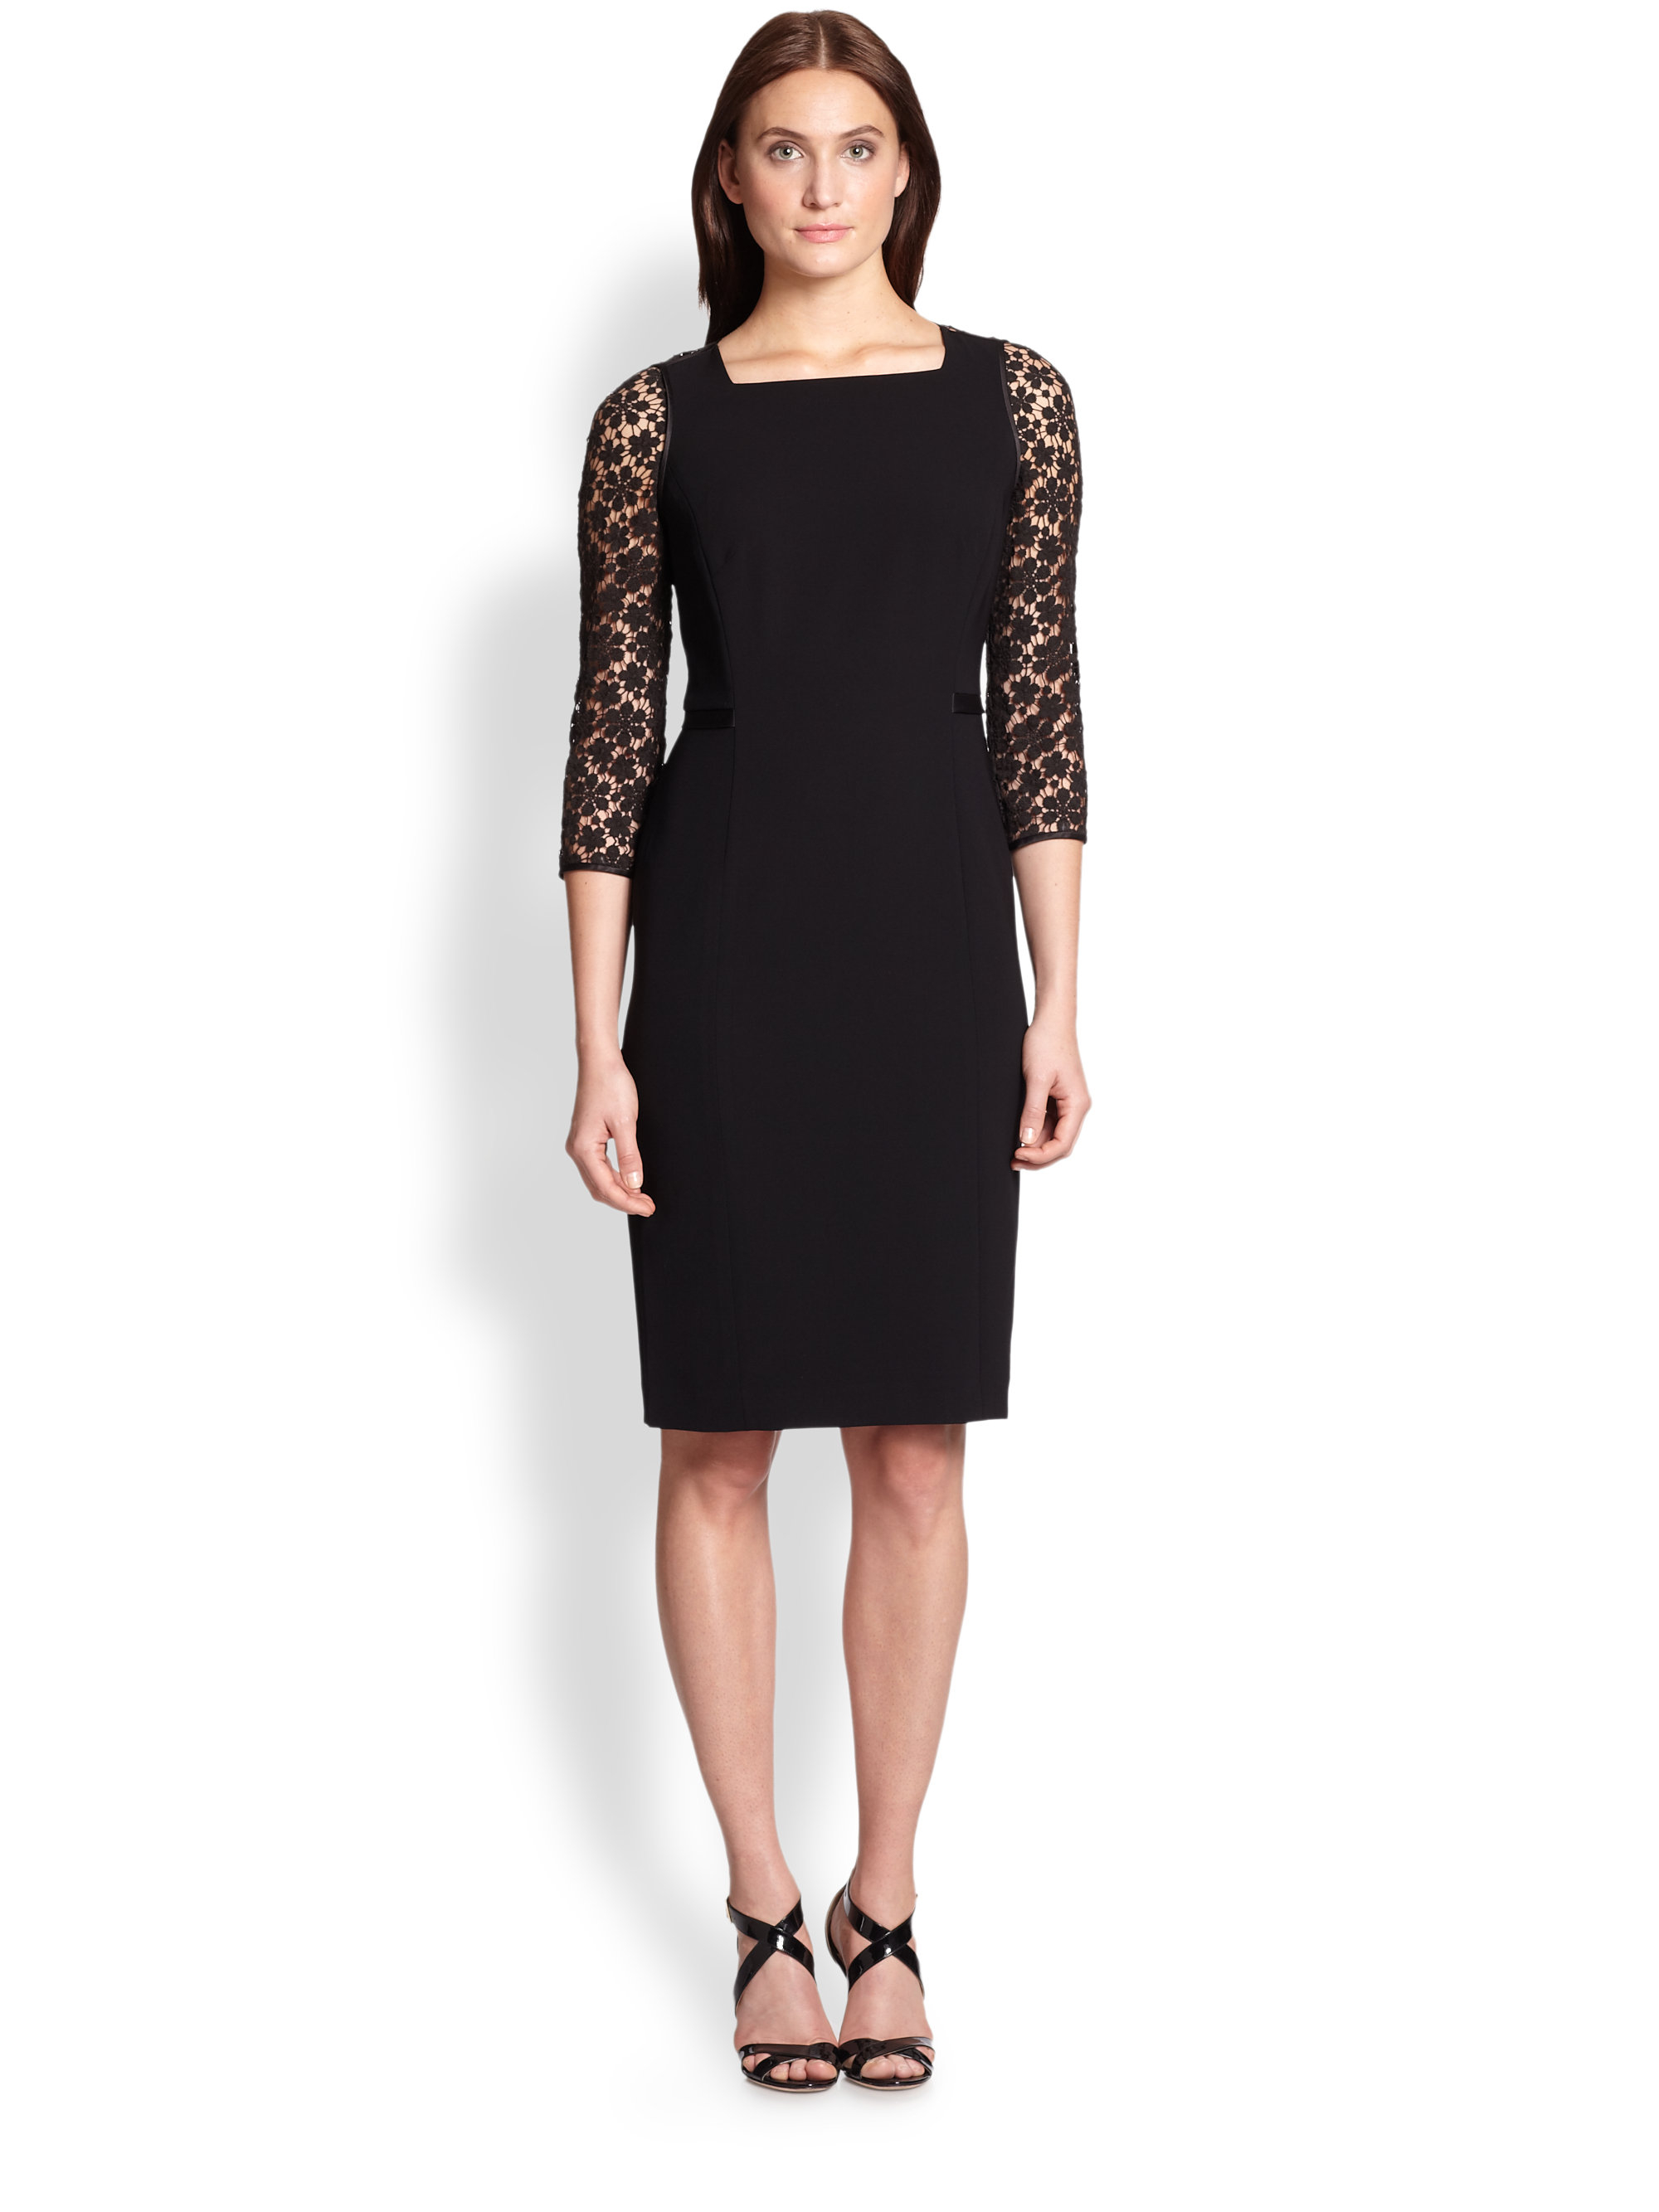 Lafayette 148 new york Lace-Detail Dress in Black | Lyst